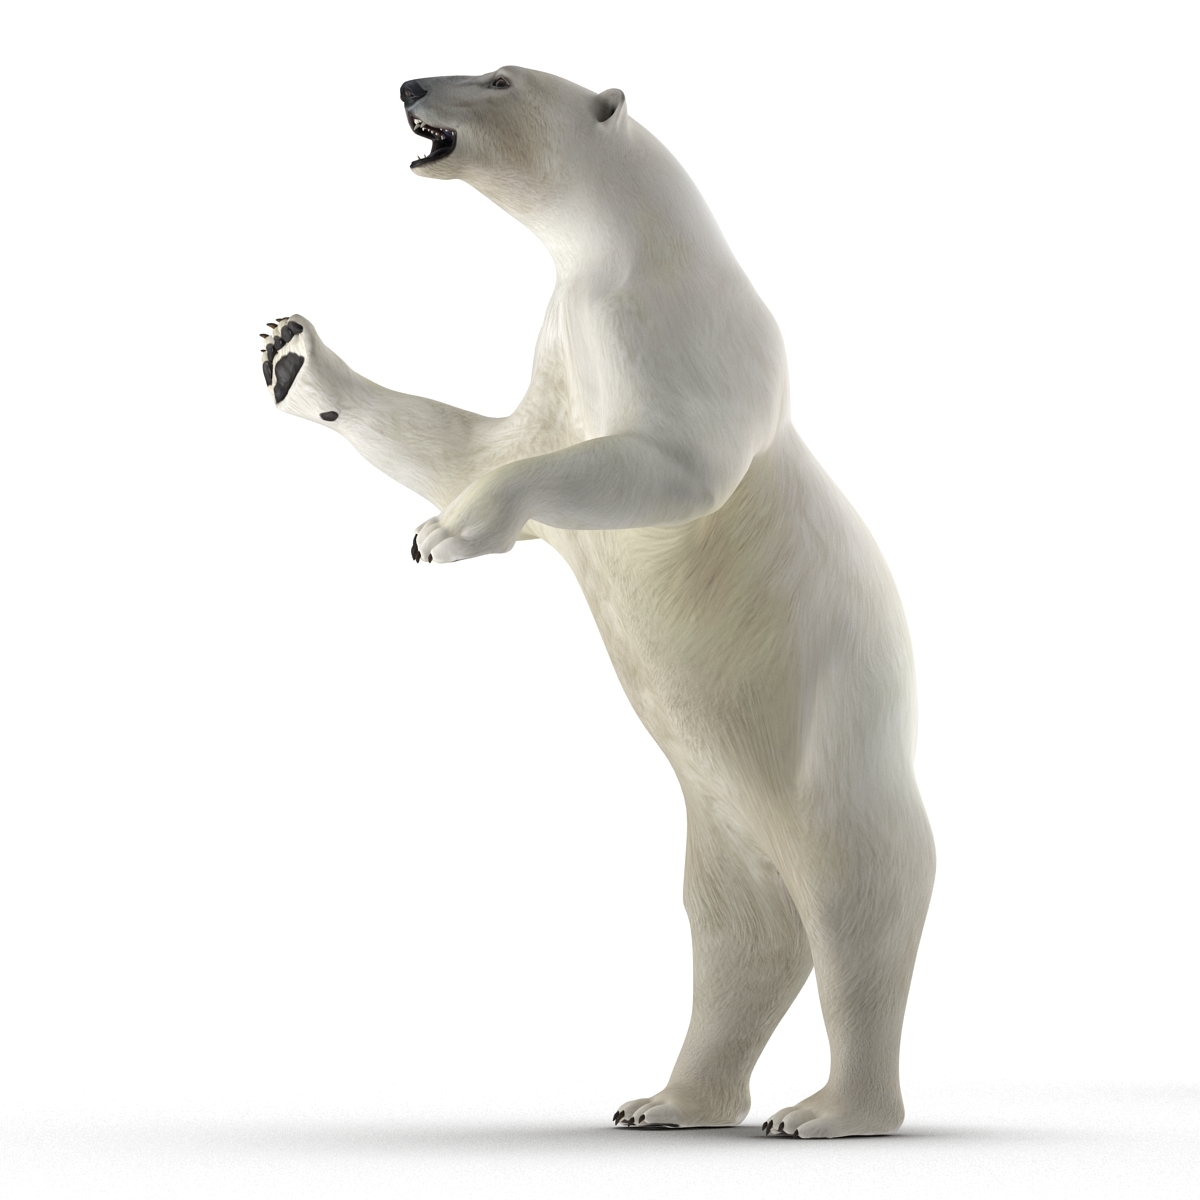 polar bear pose 3 3d model